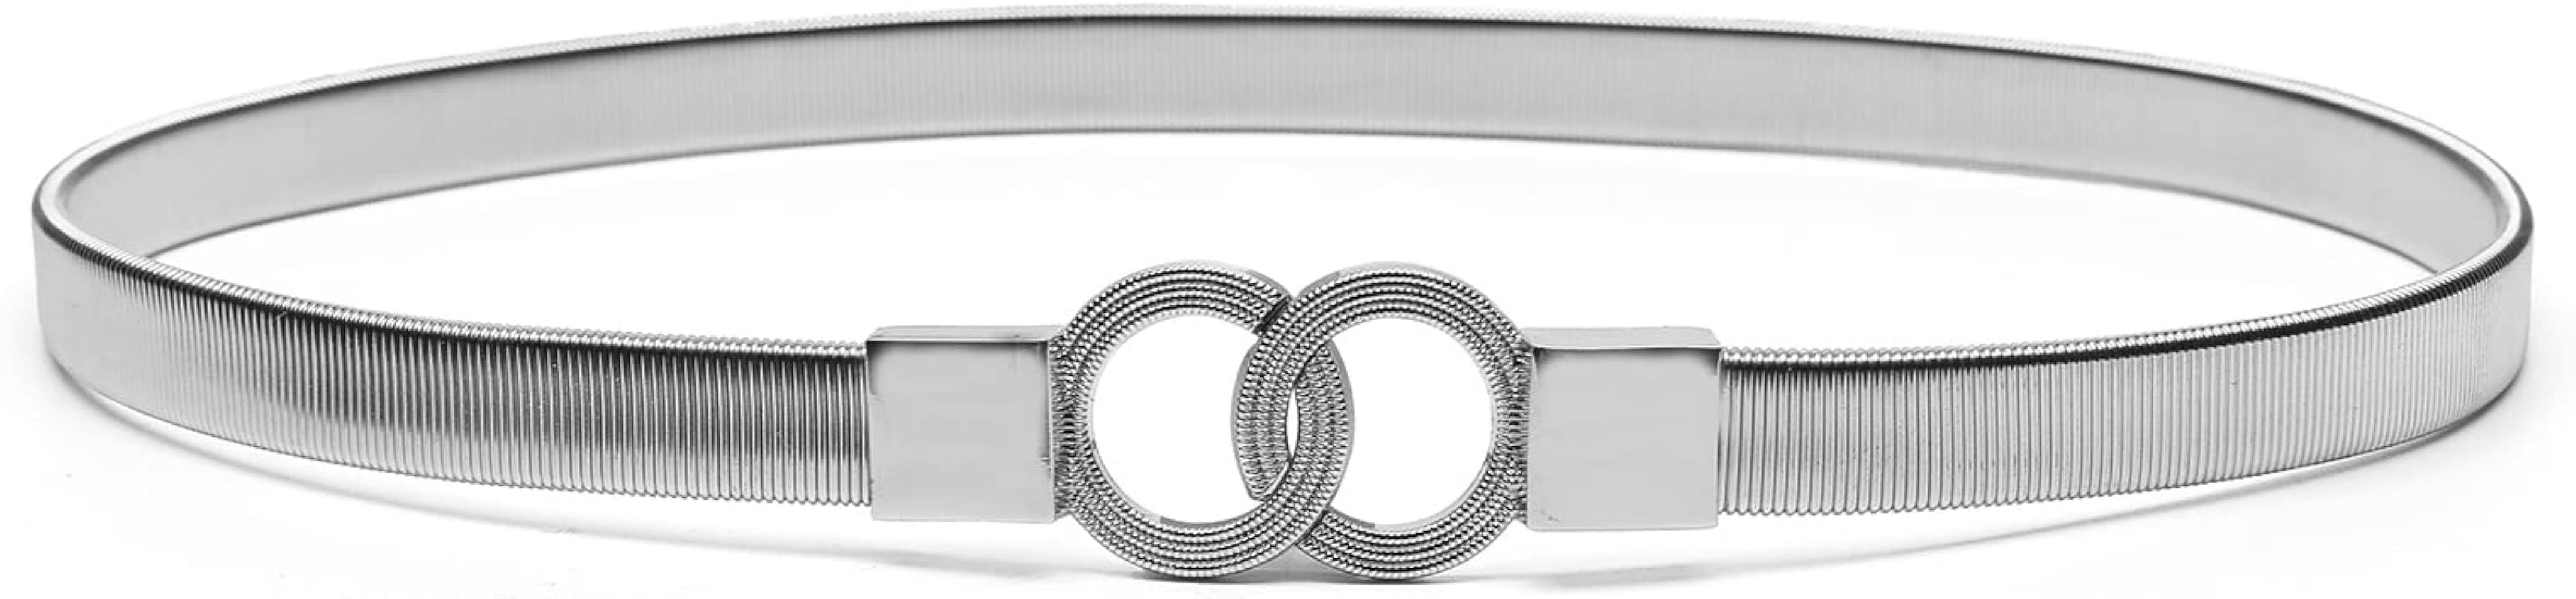 Skinny Waist Belt of Women Elastic Metal Stretch Chain Belt Gold and Silver | Amazon (US)